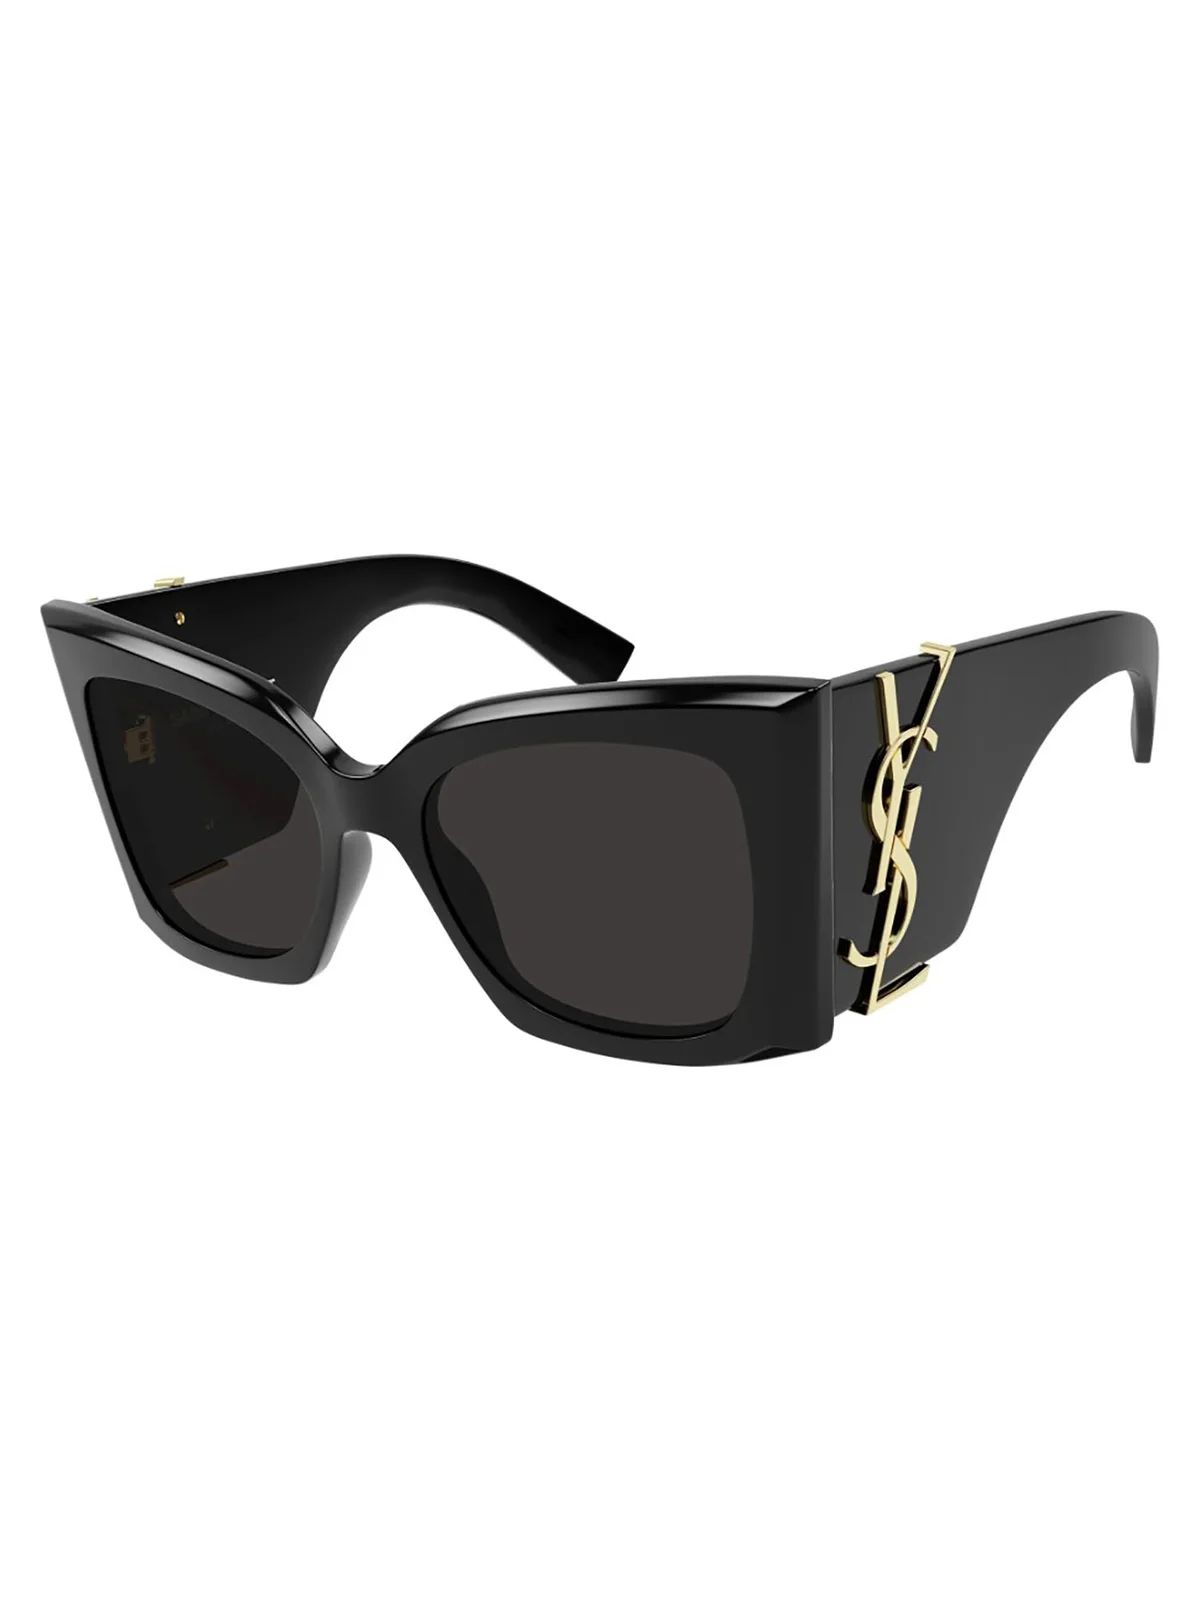 Saint Laurent Eyewear SL M119 Cat-Eye Sunglasses | Cettire Global